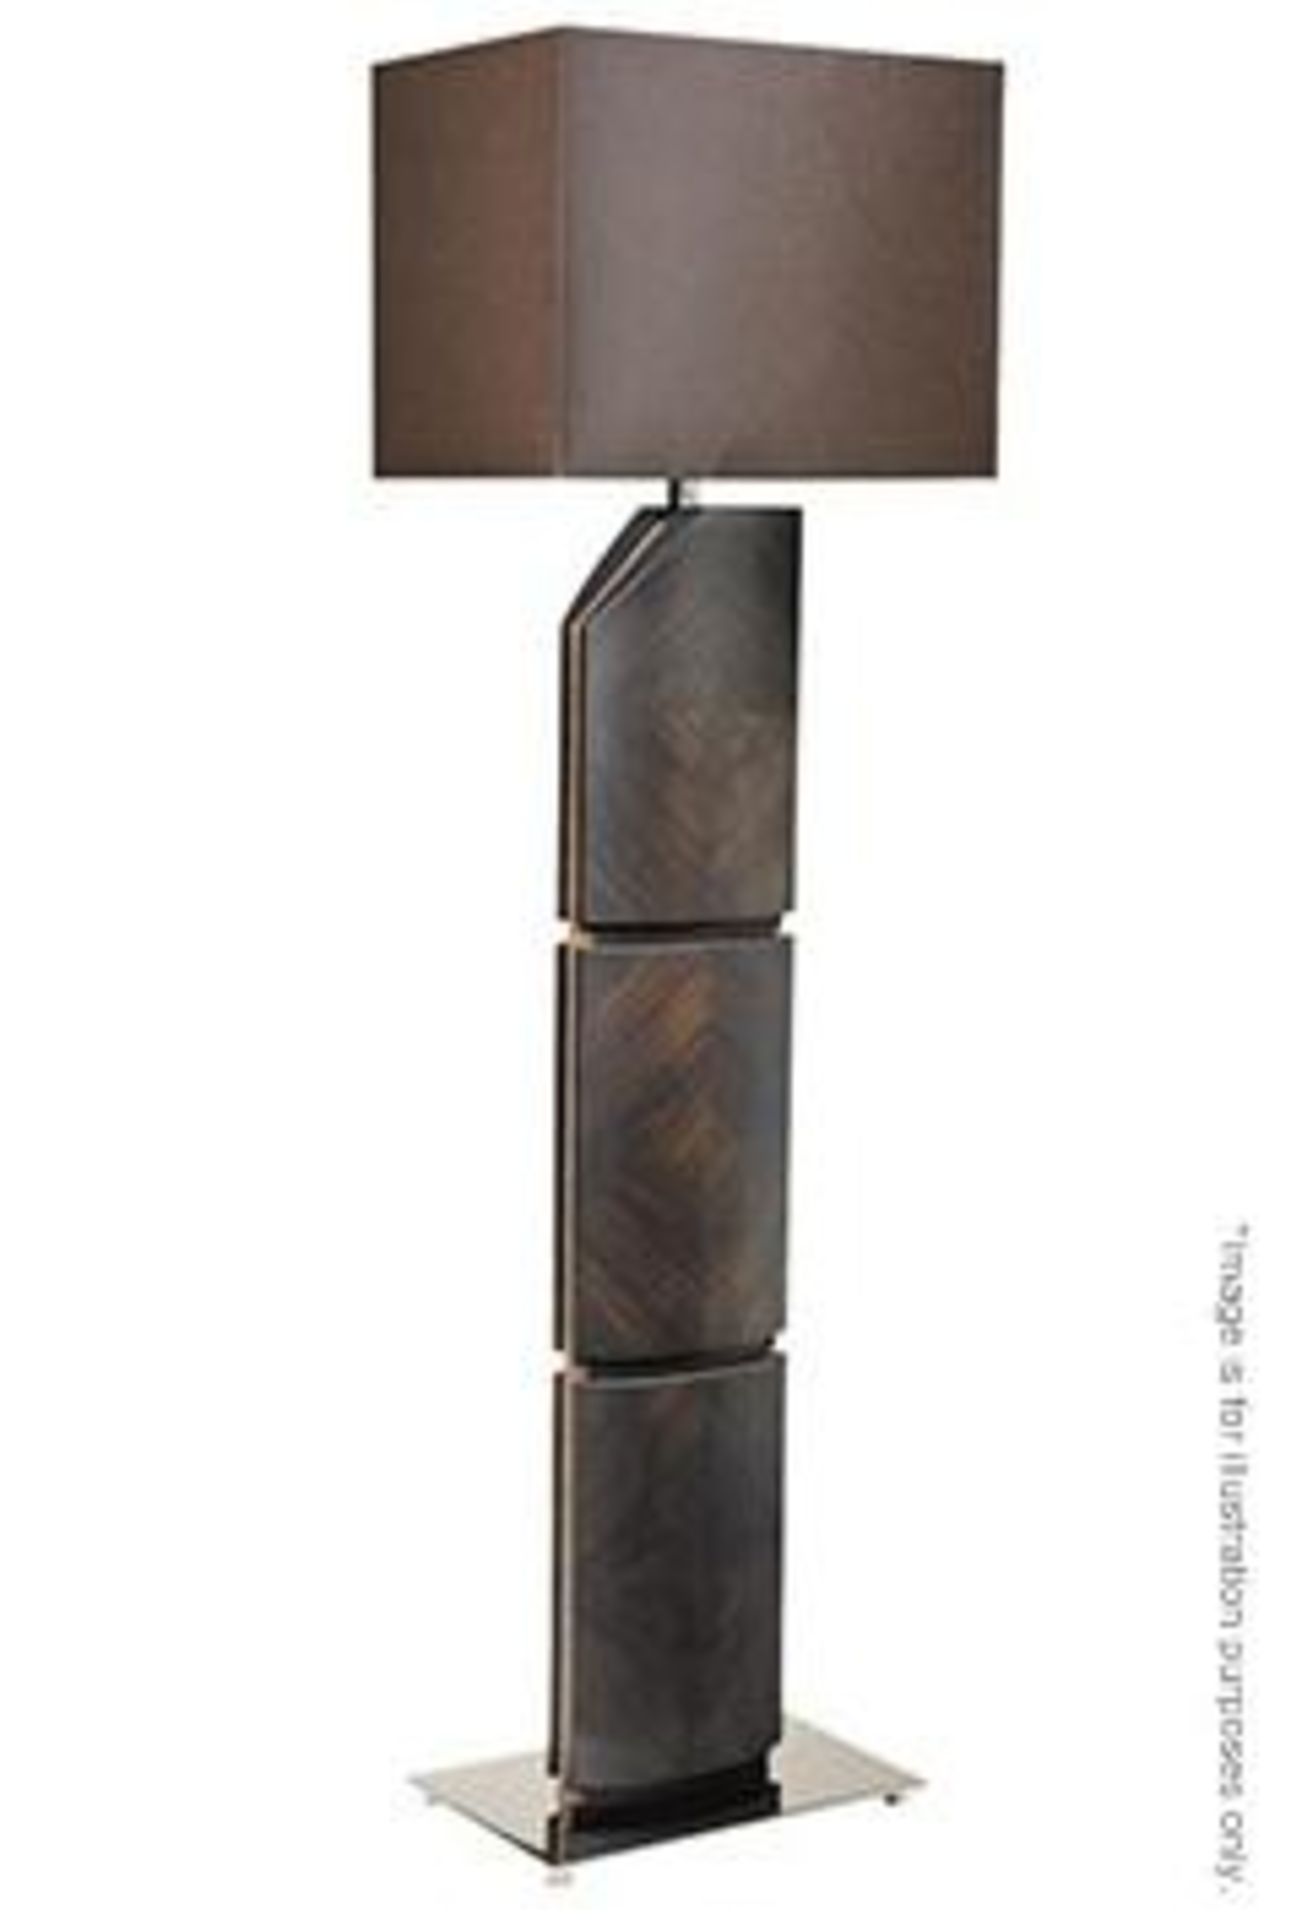 1 x SMANIA 'Wi' Italian Luxury Floor Lamp In Leather With Rectangular Shade - Ref: 6078343 P2/19 - C